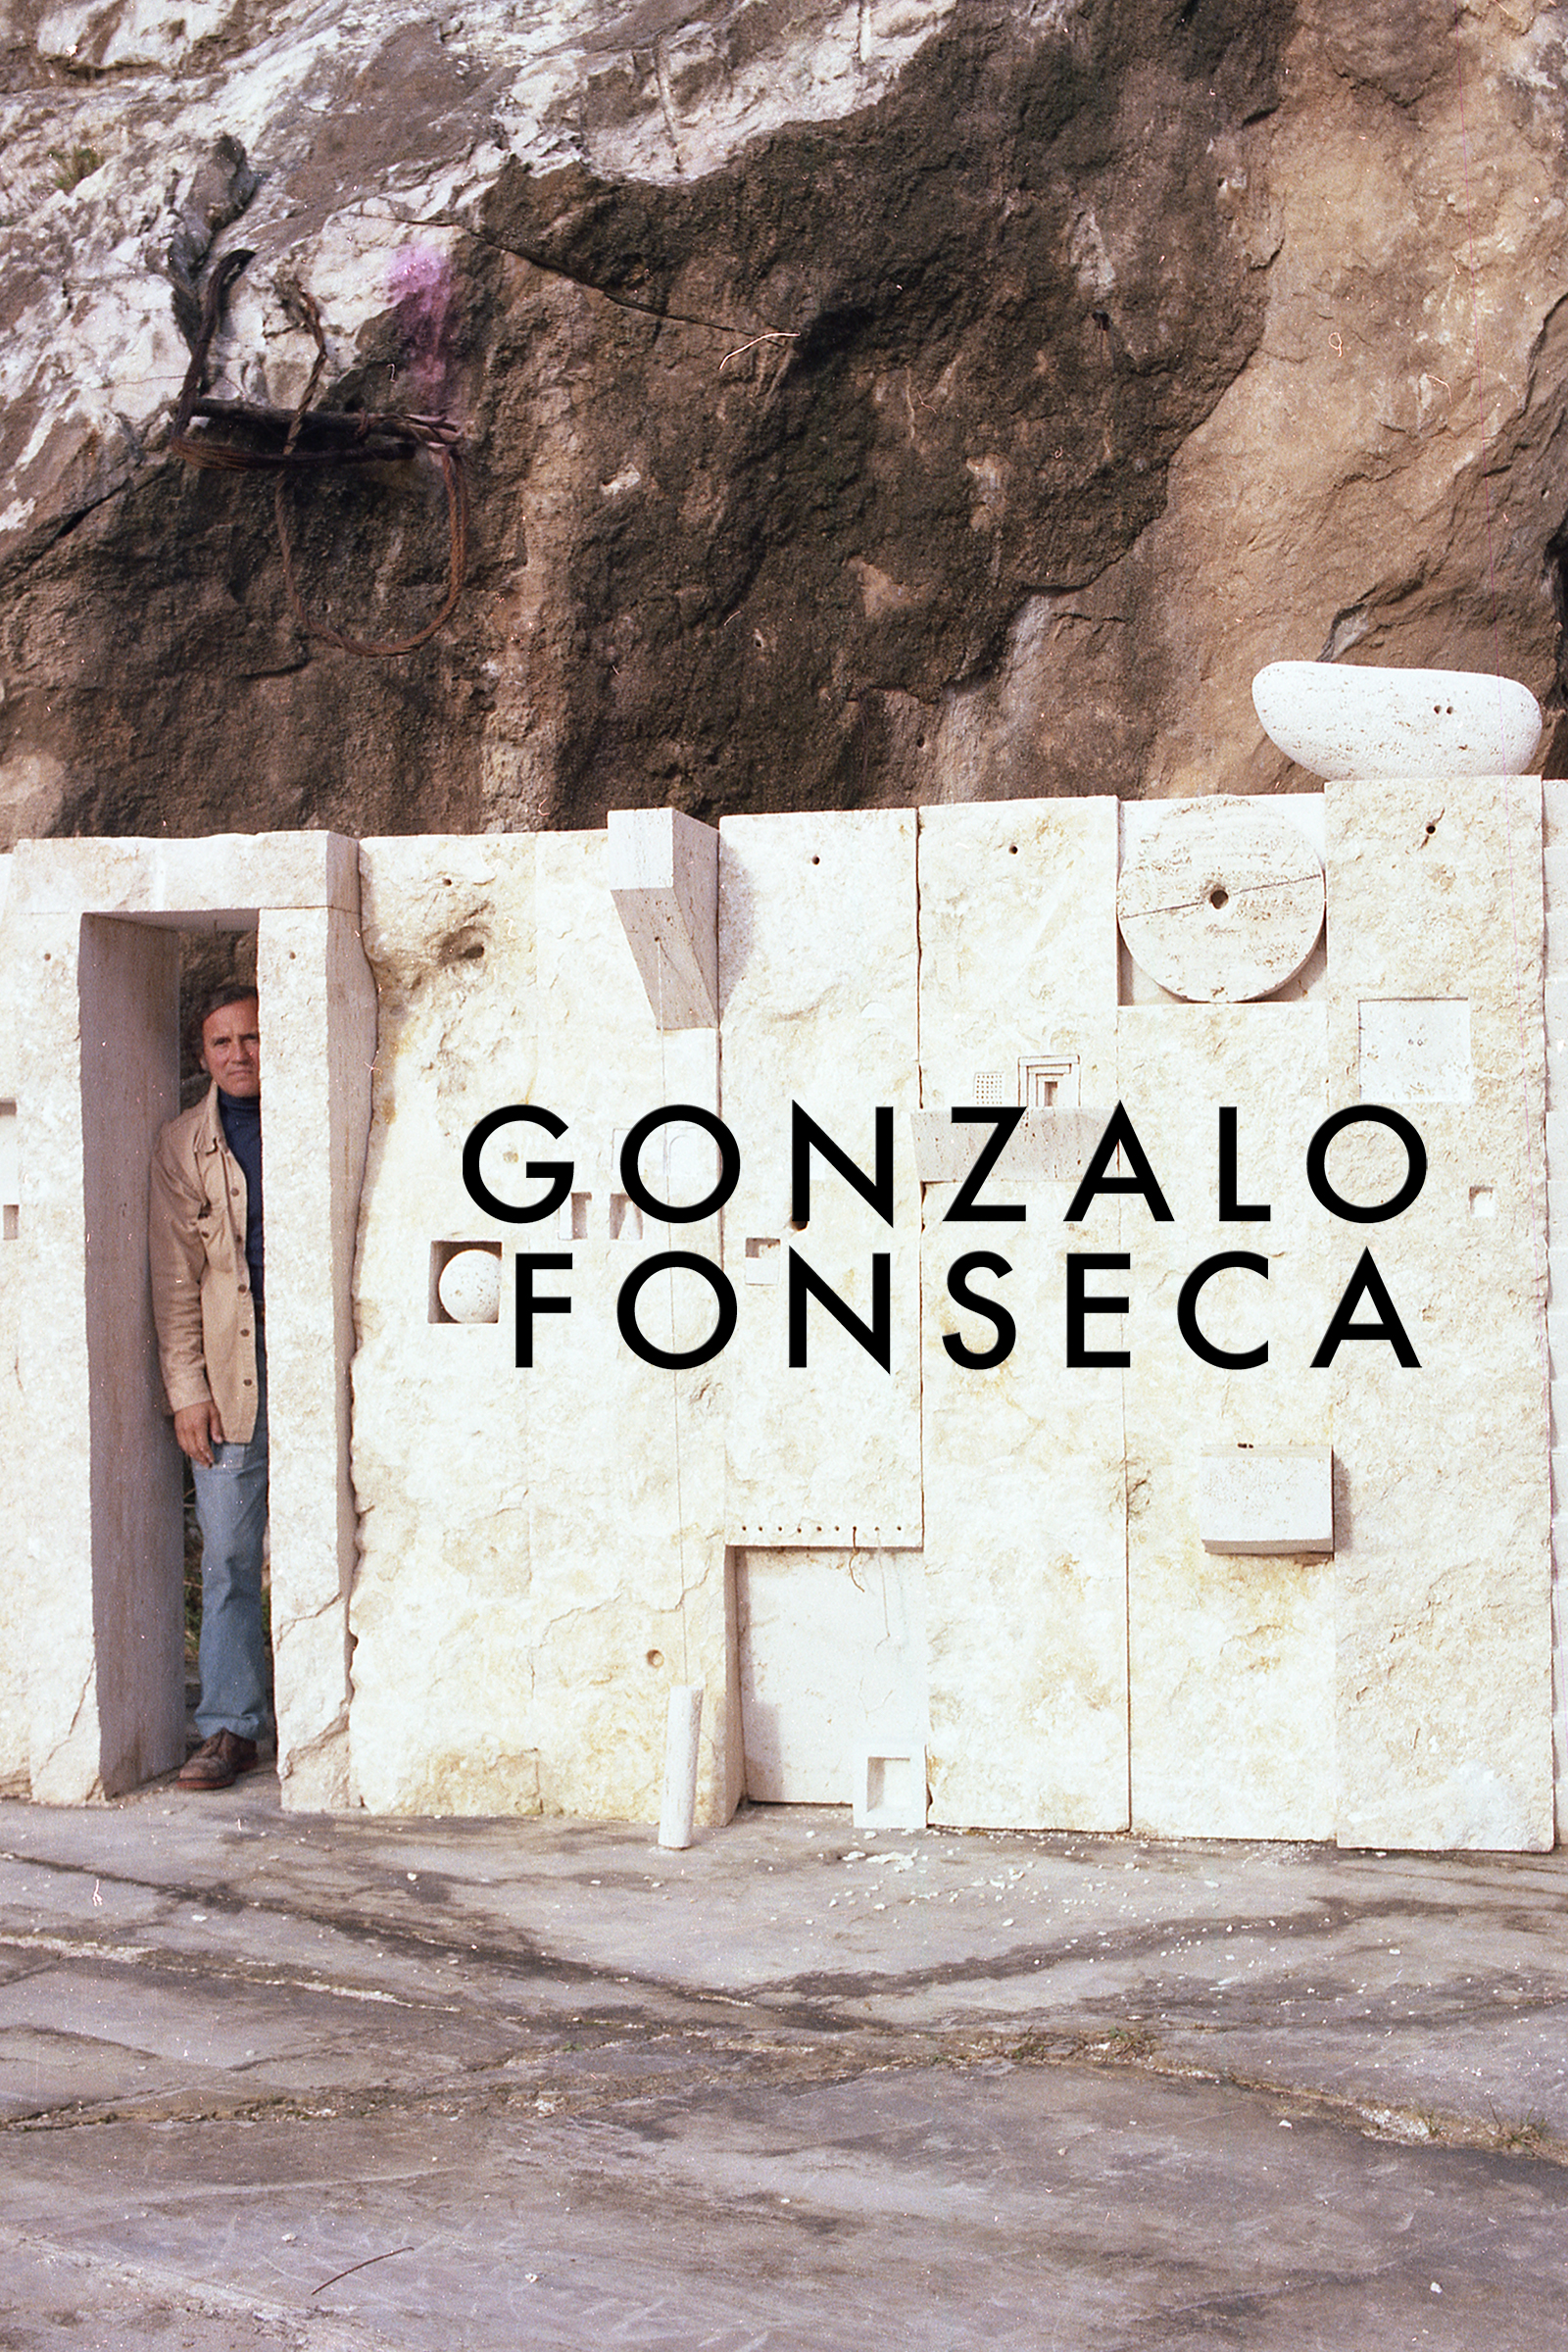 Where to stream Gonzalo Fonseca